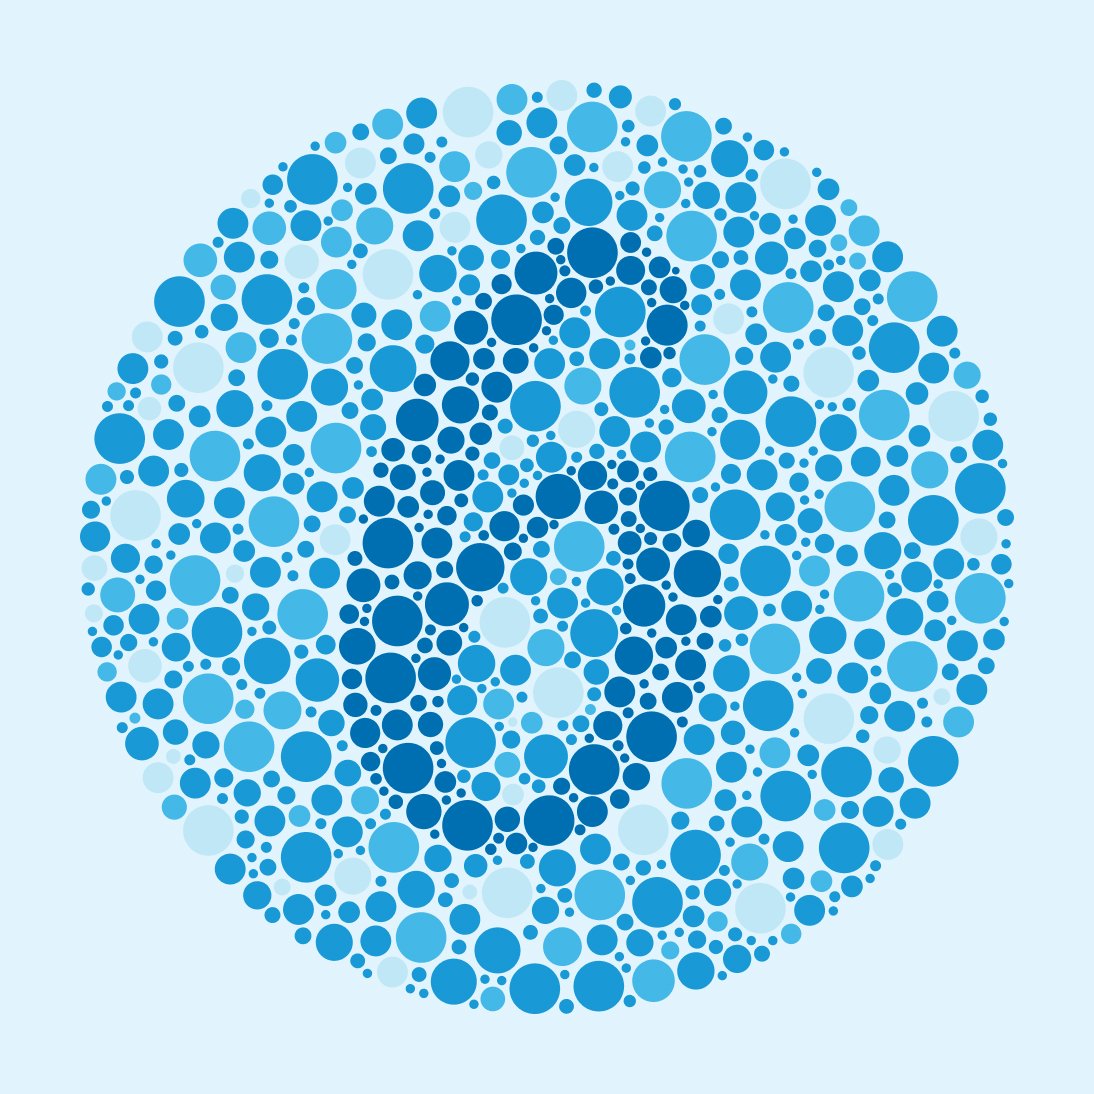 Illustration of a color blindness test chart